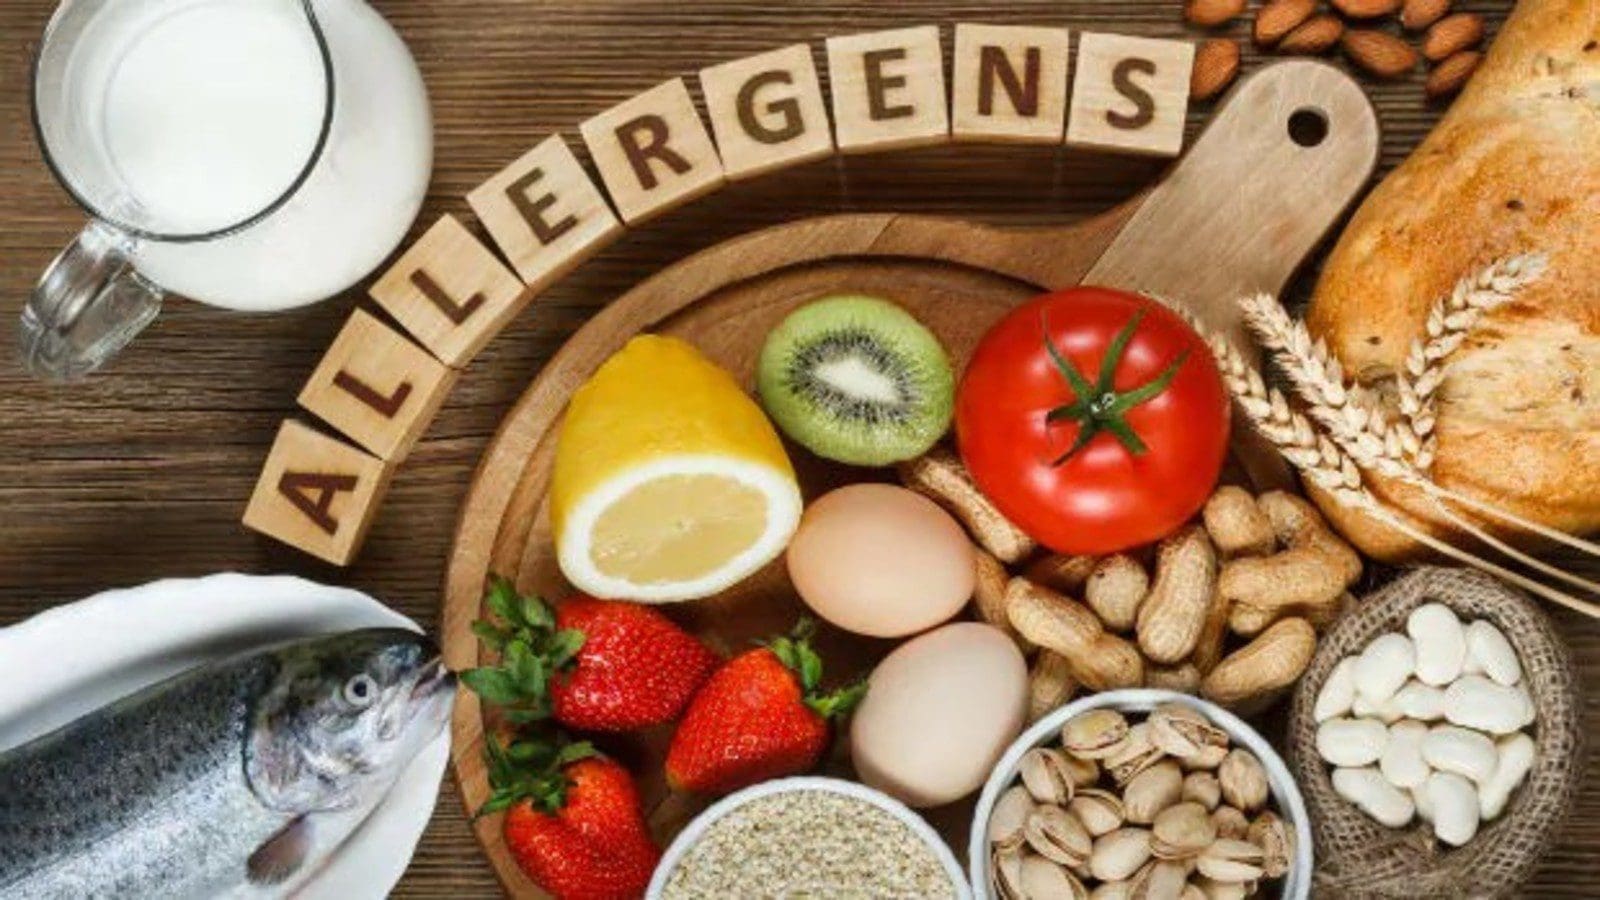 FSA updates food allergen labelling guidance to enhance consumer safety